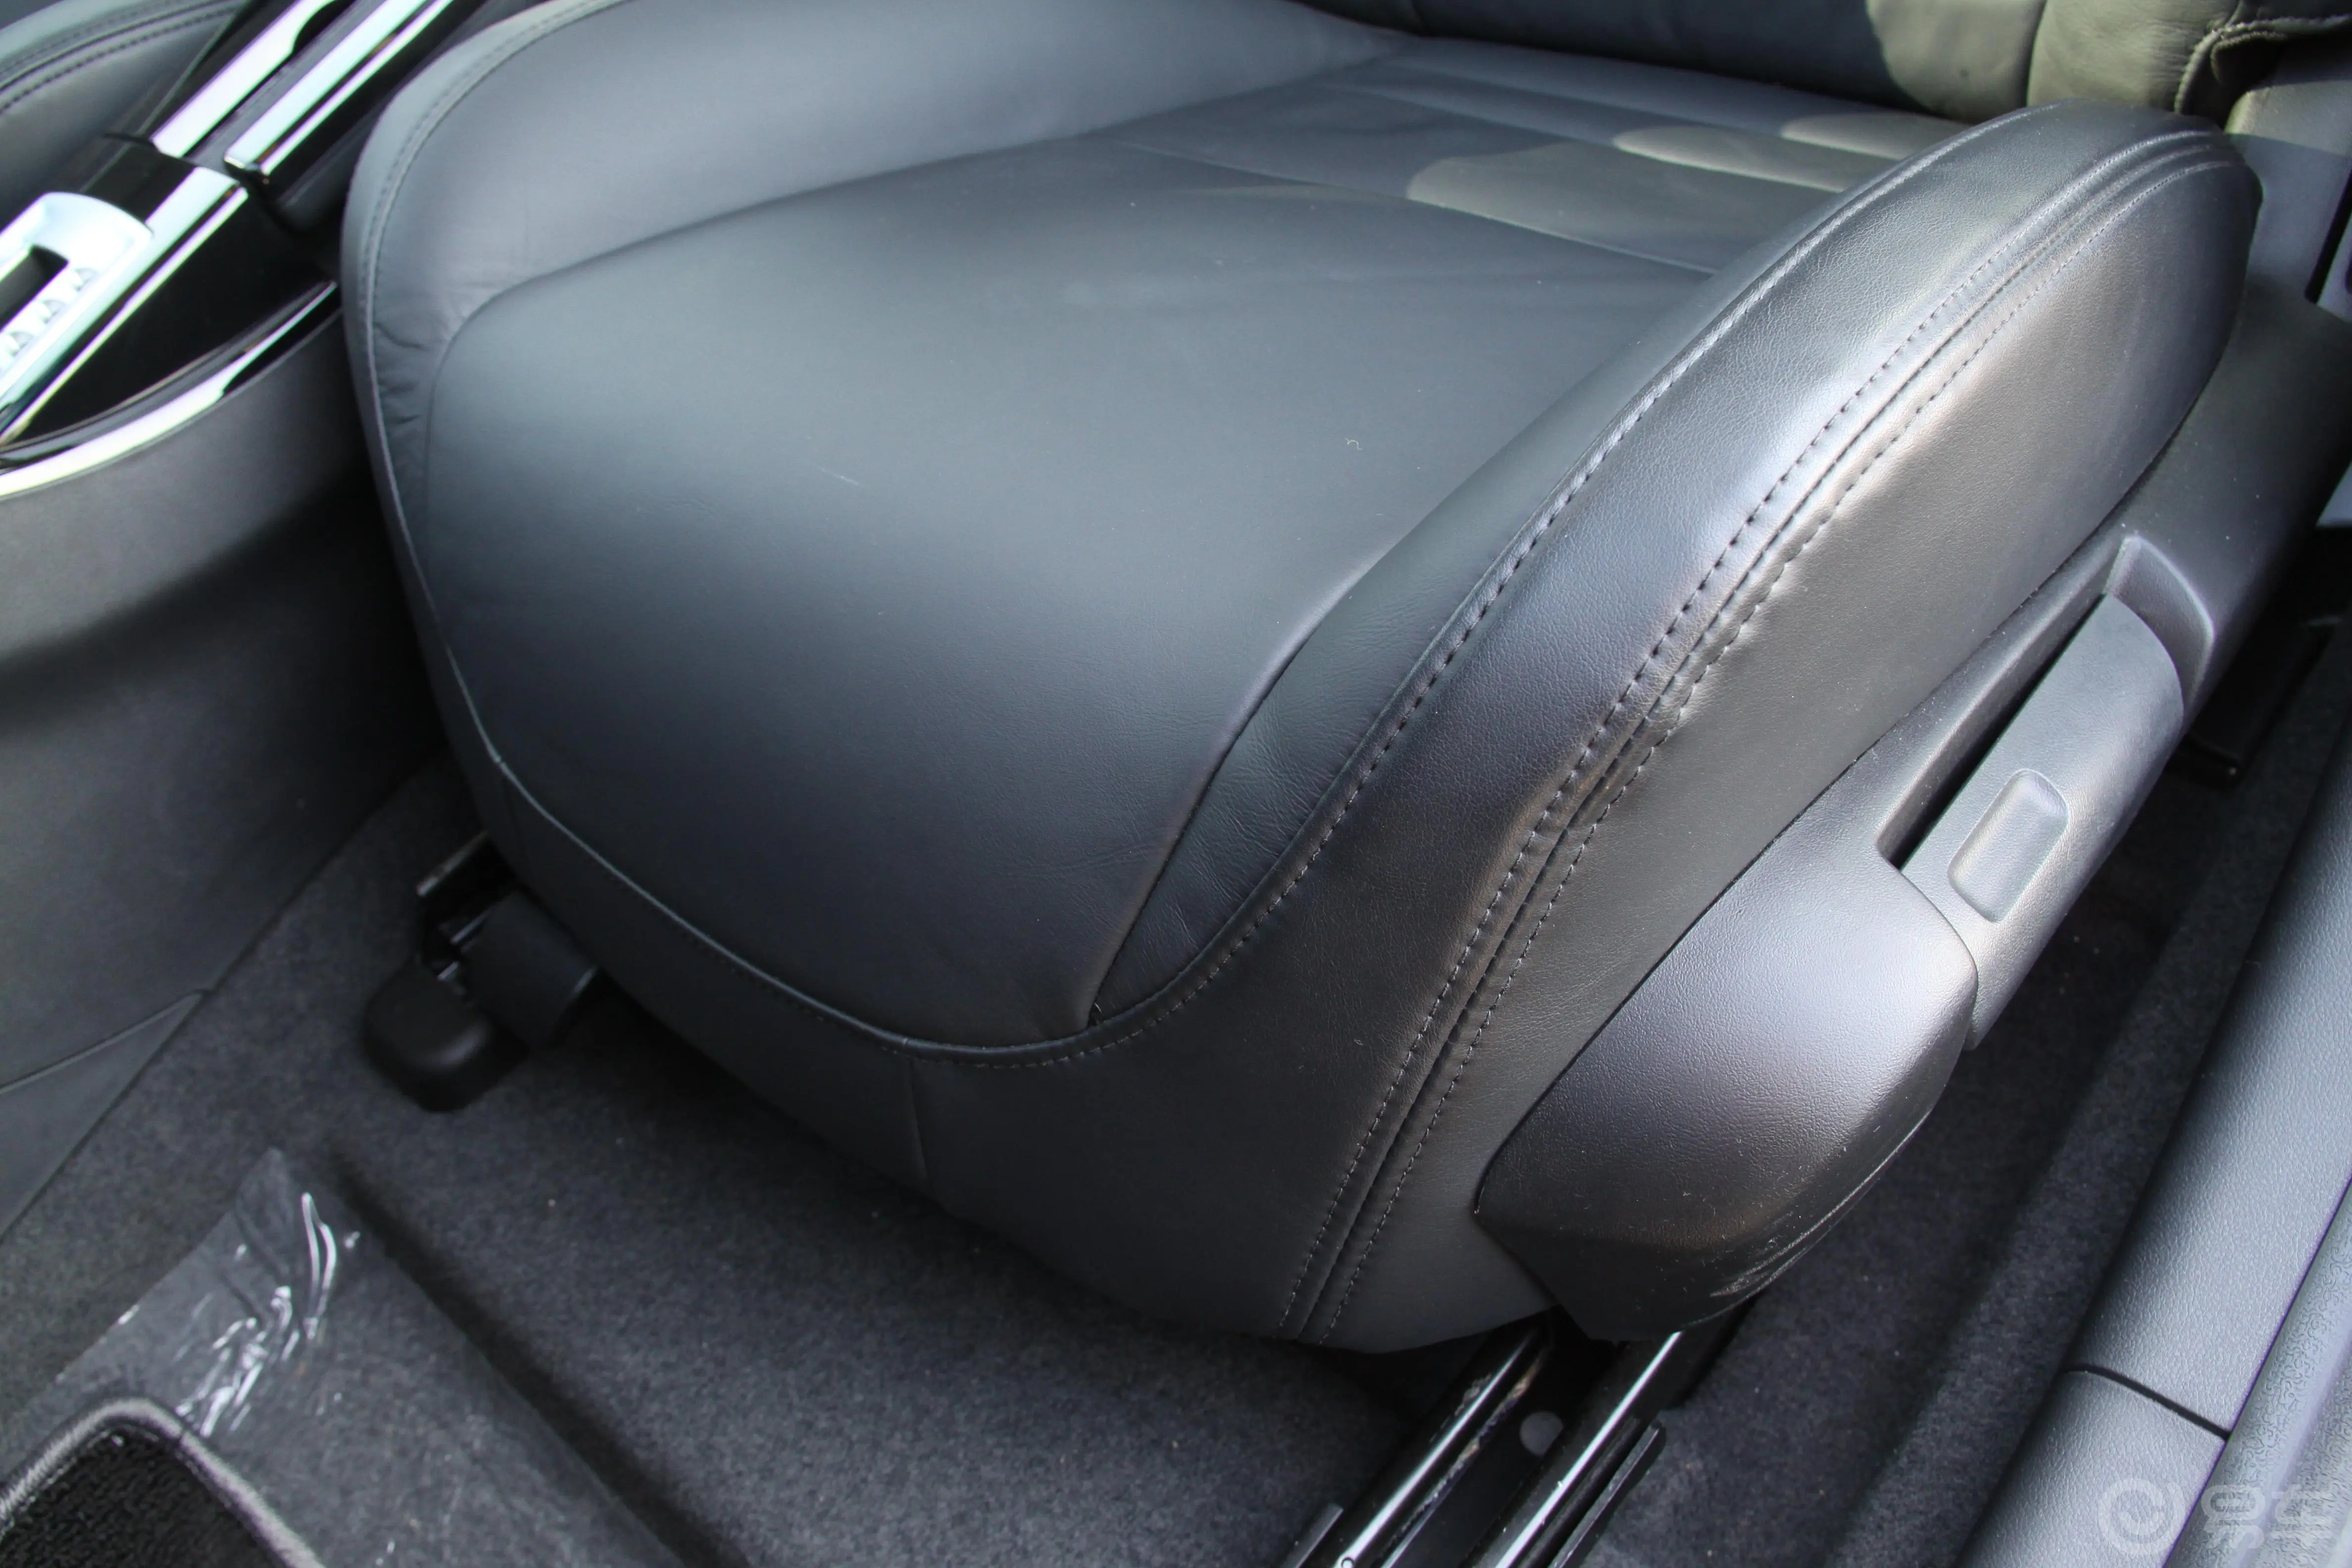 MG6掀背 1.8T 精英版座椅特殊细节